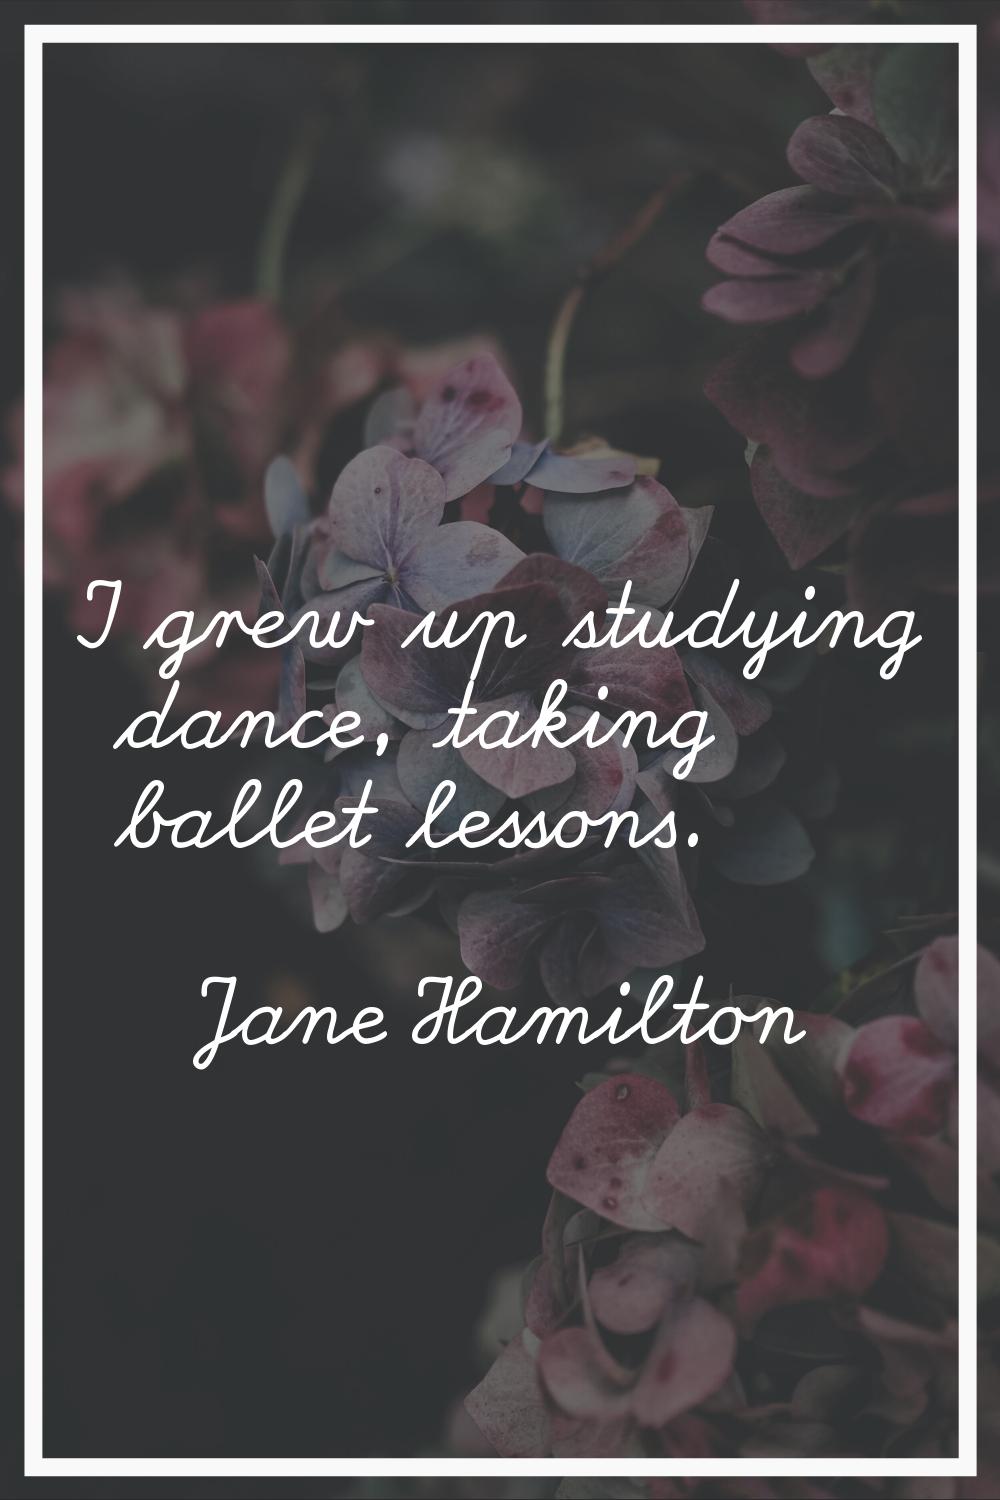 I grew up studying dance, taking ballet lessons.